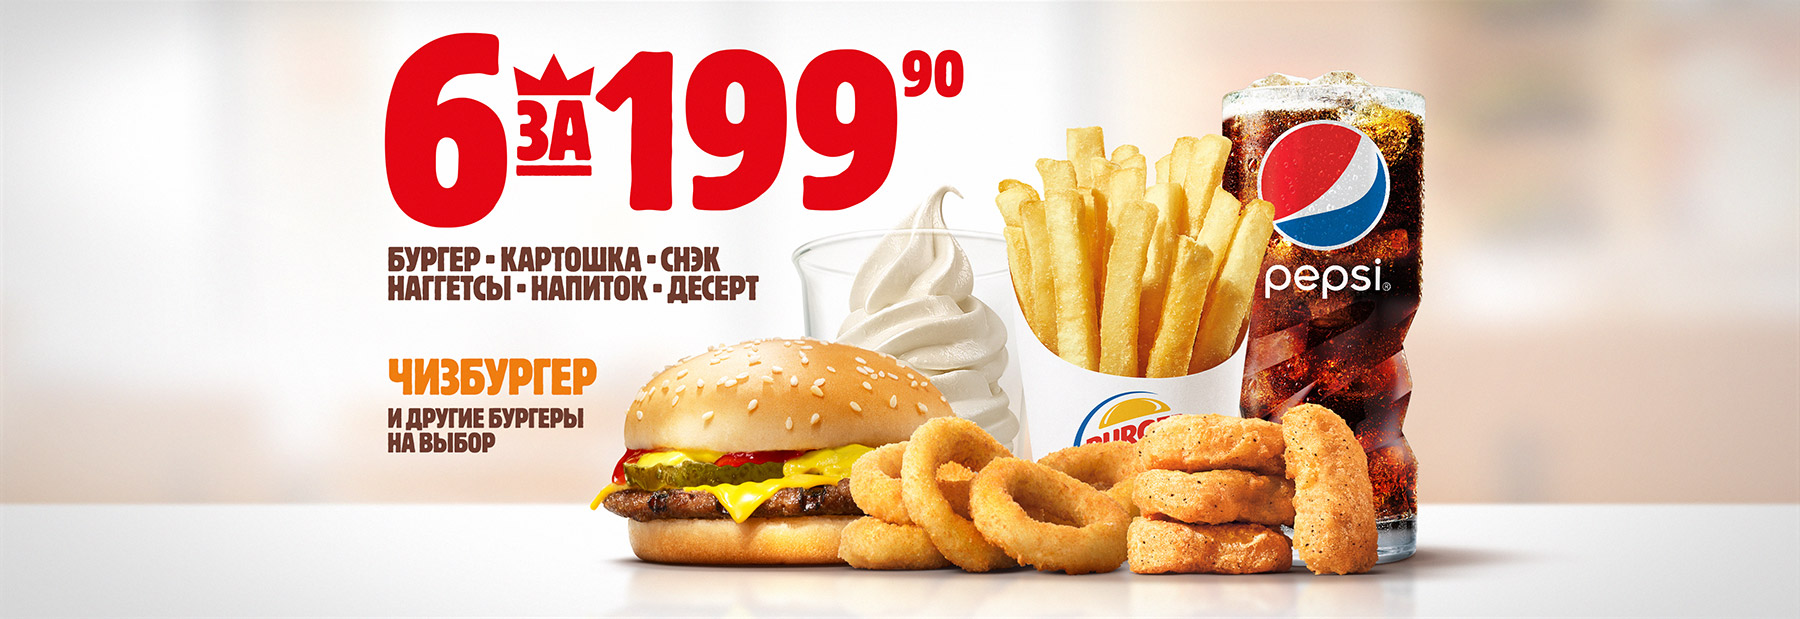 Рекламная акция Burger King (Бургер Кинг) «Комплекс 6 за 199.90»